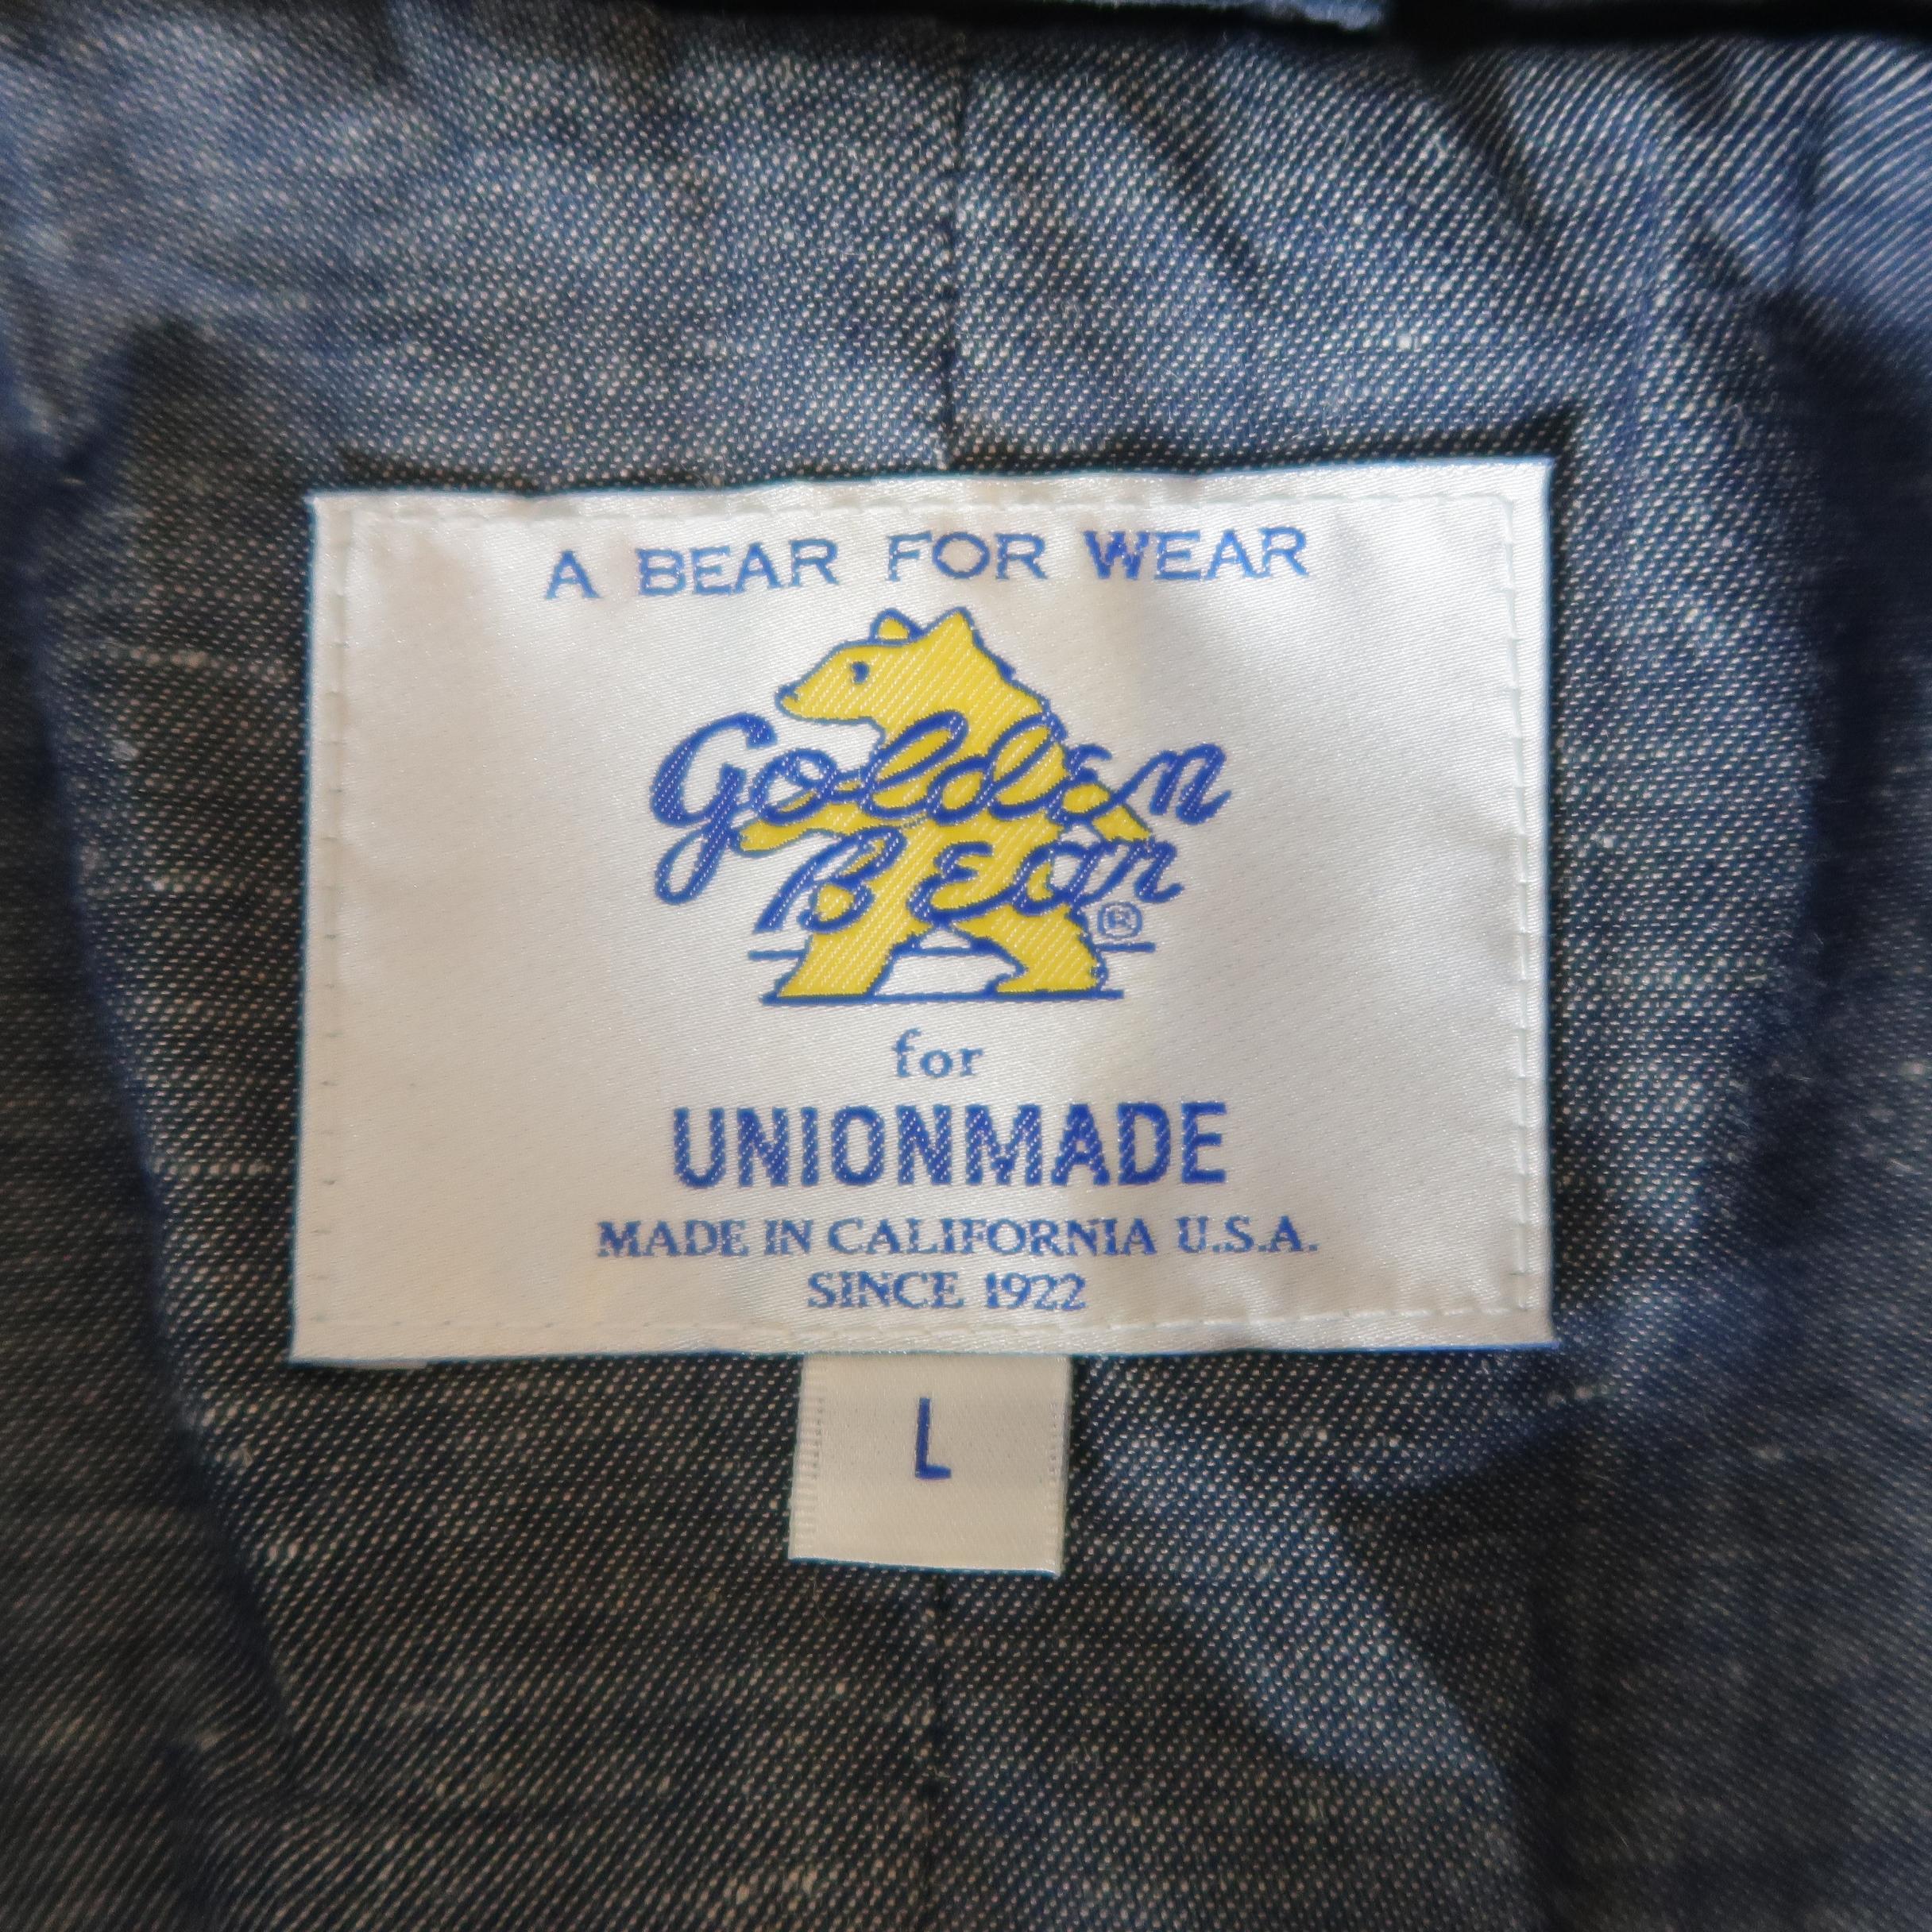 UNIONMADE X GOLDEN BEAR L Navy Textured Leather Notch Lapel Jacket 1